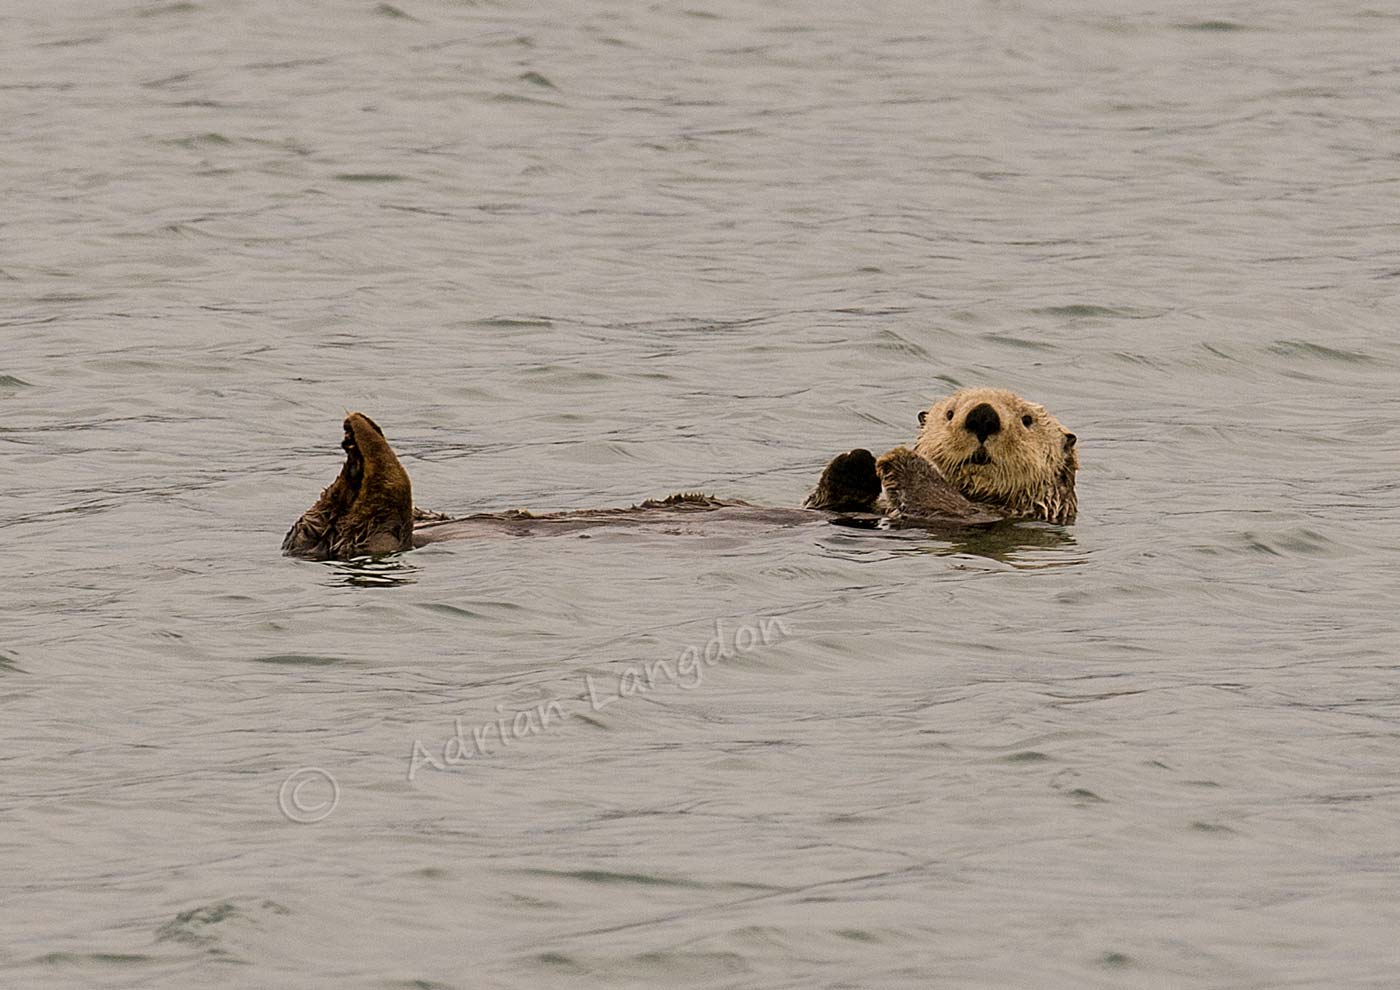 images-naturally!: Alaska .....Sea Otters